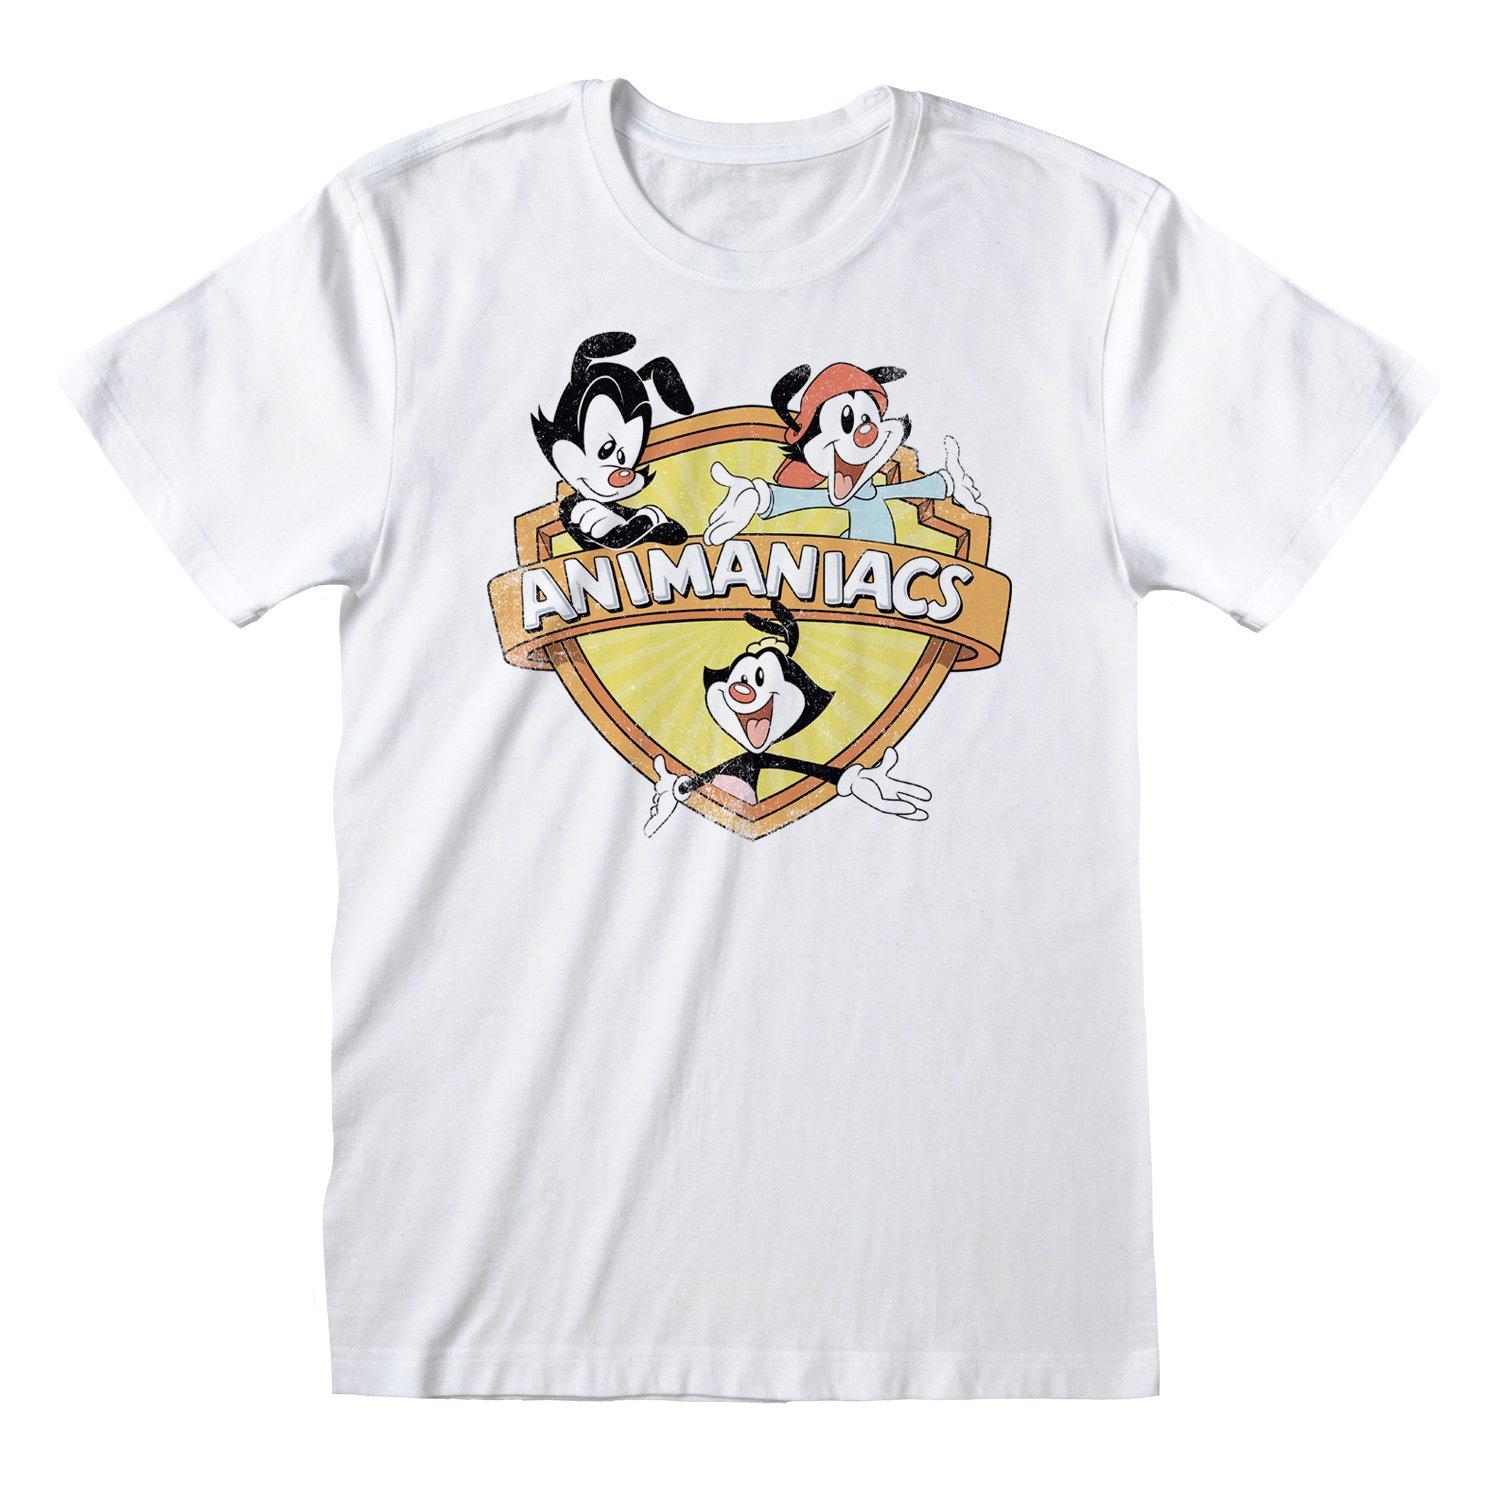 T-shirt Damen Weiss Bedruckt XL von Animaniacs